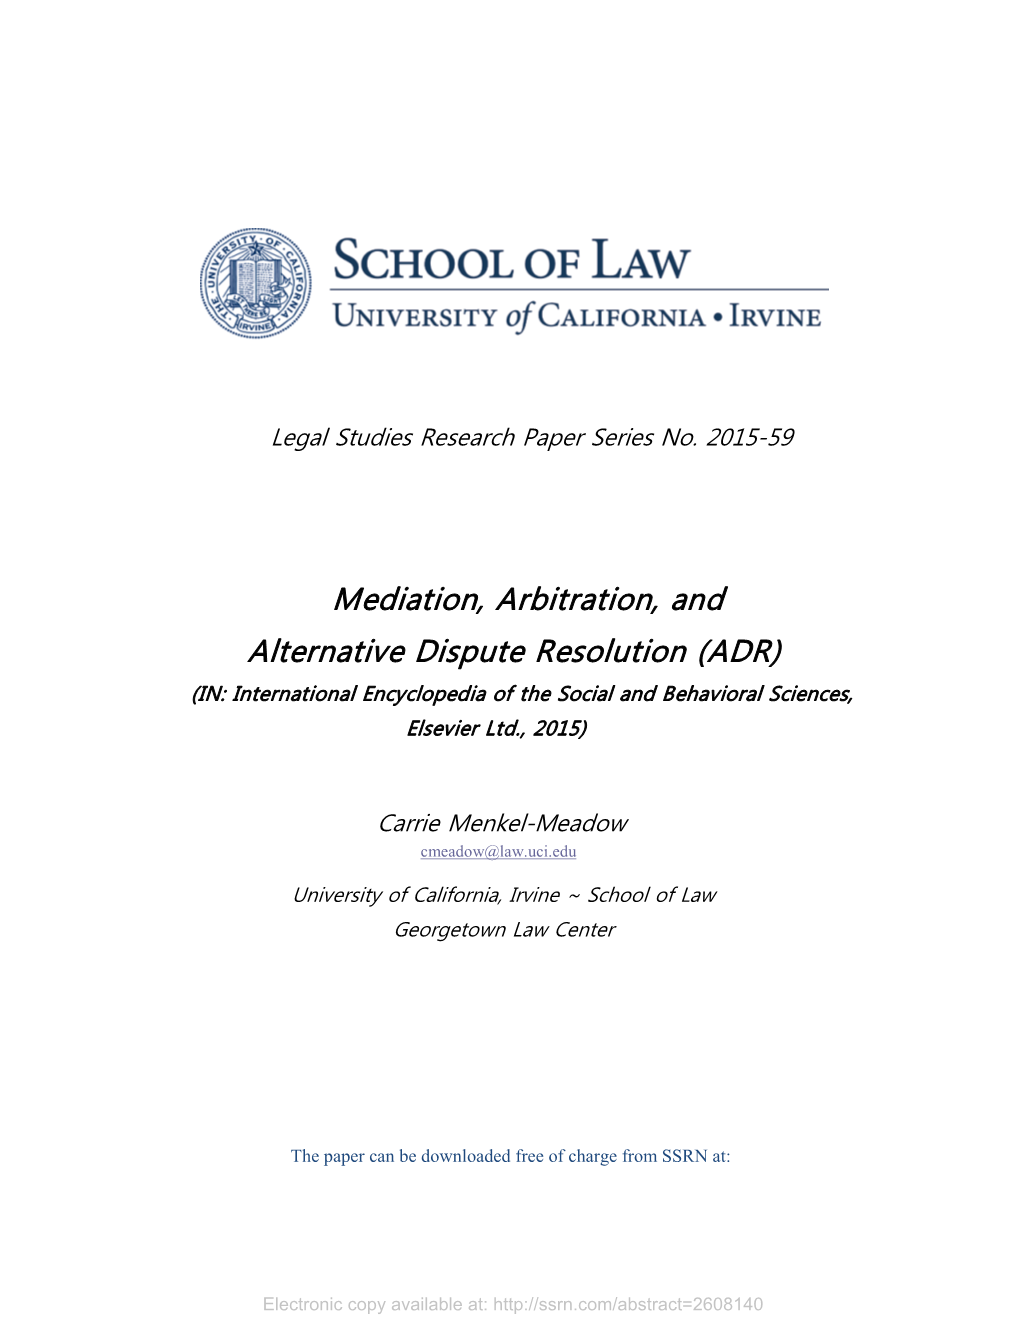 Mediation, Arbitration, and Alternative Dispute Resolution (ADR) (IN: International Encyclopedia of the Social and Behavioral Sciences, Elsevier Ltd., 2015)